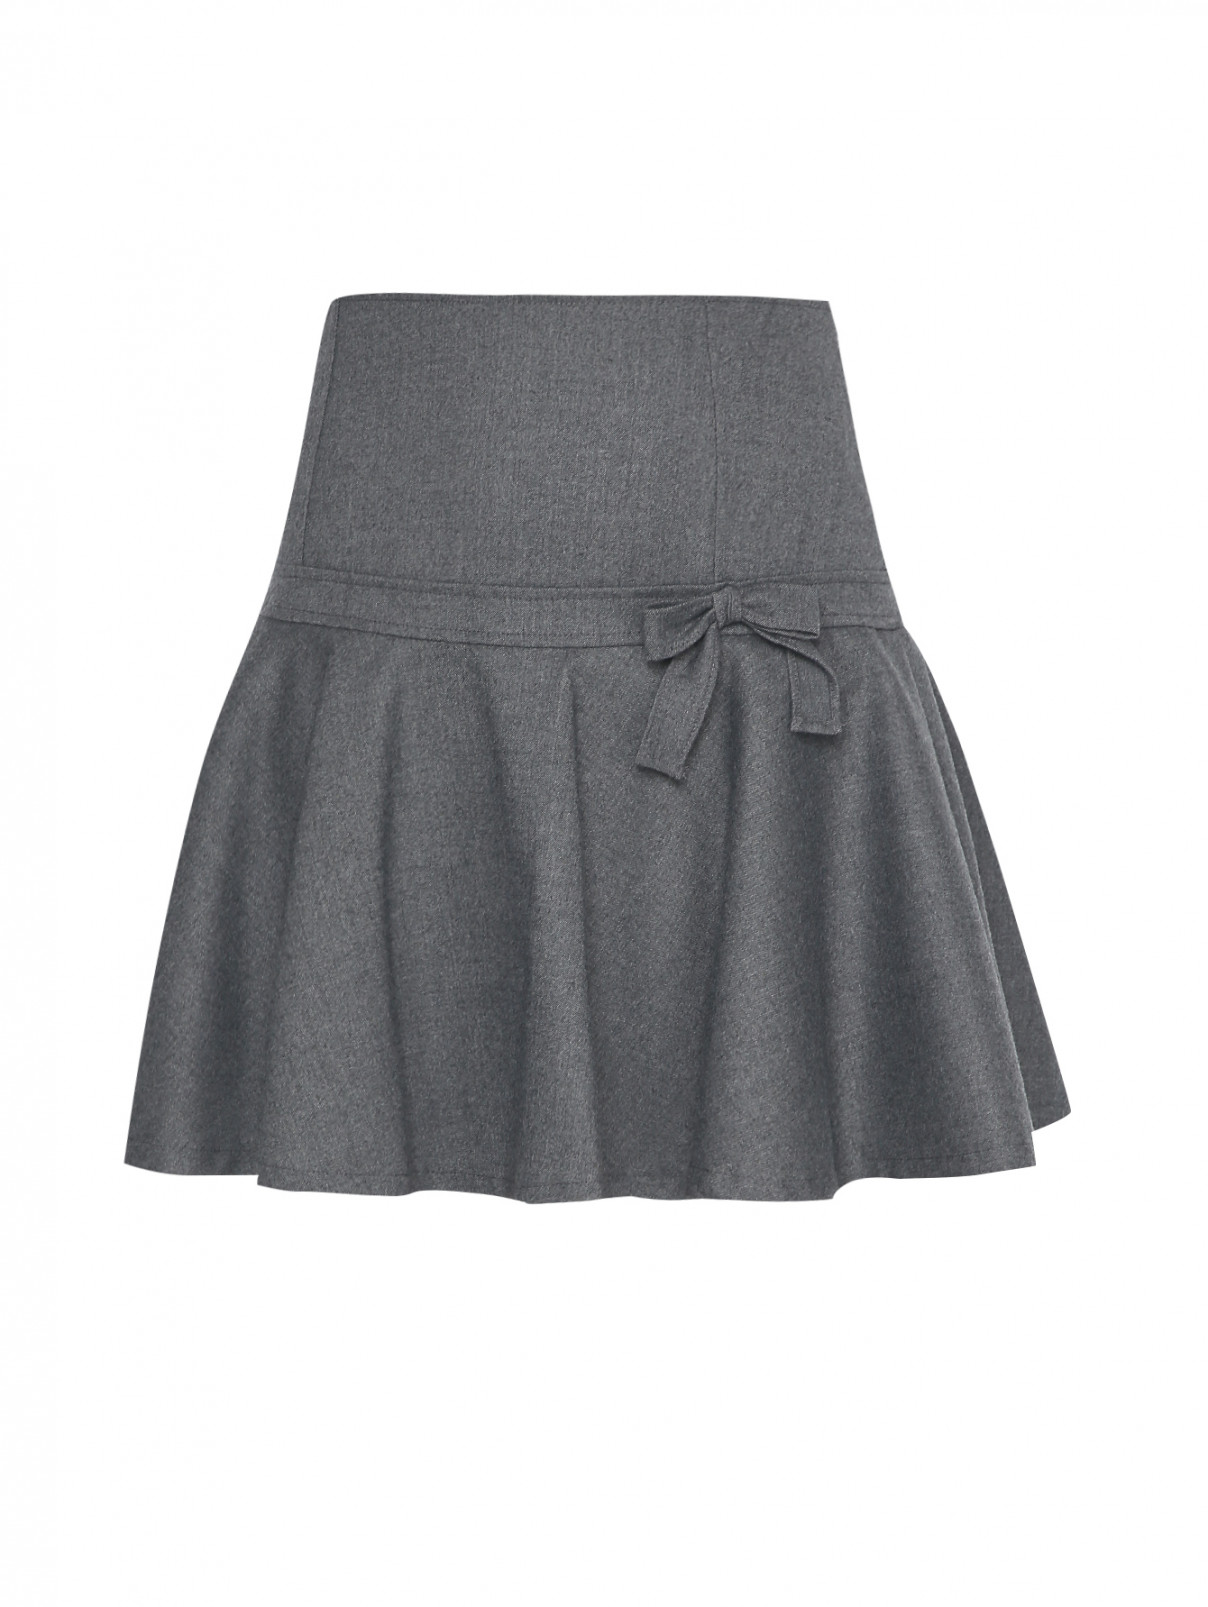 Юбка-мини из шерсти Aletta Couture  –  Общий вид  – Цвет:  Серый